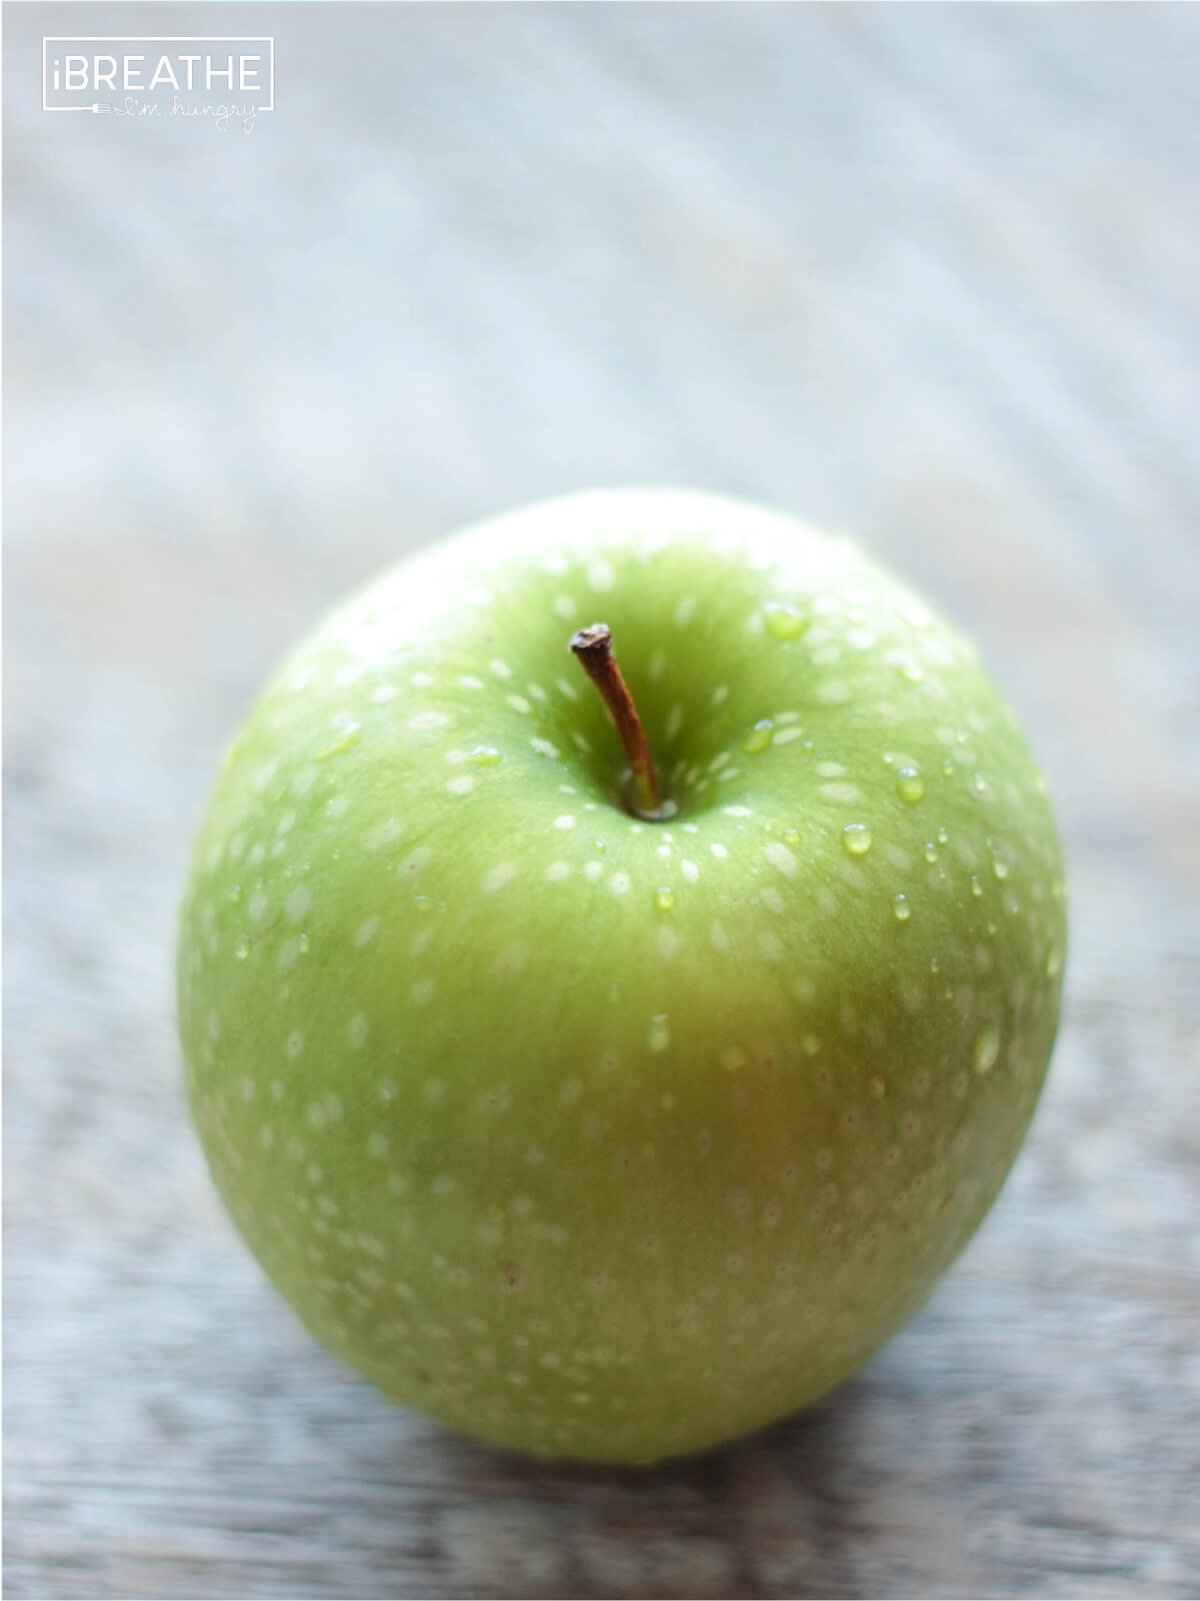 A granny smith apple